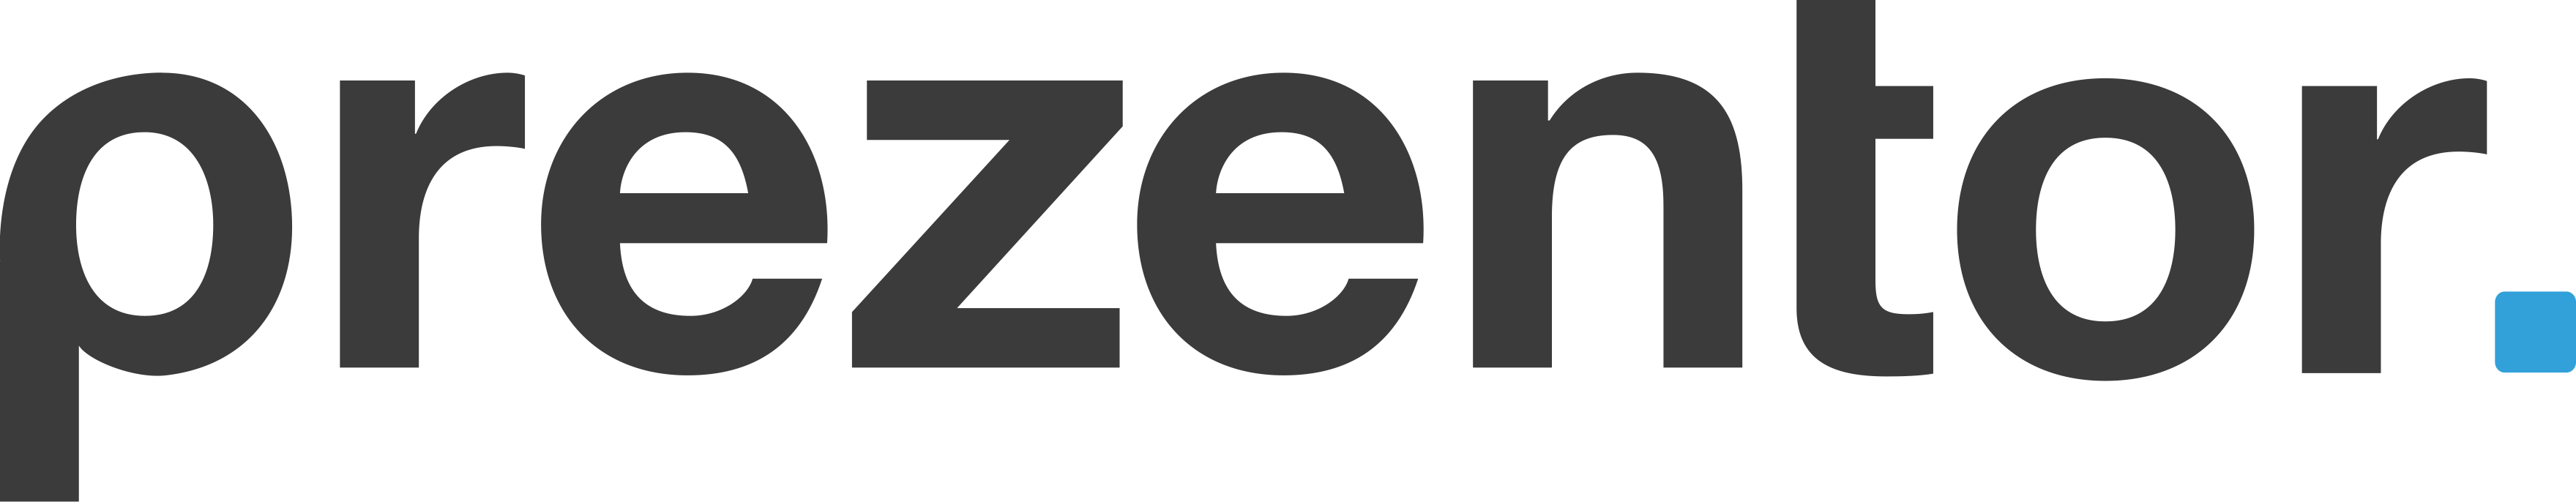 prezentor logo